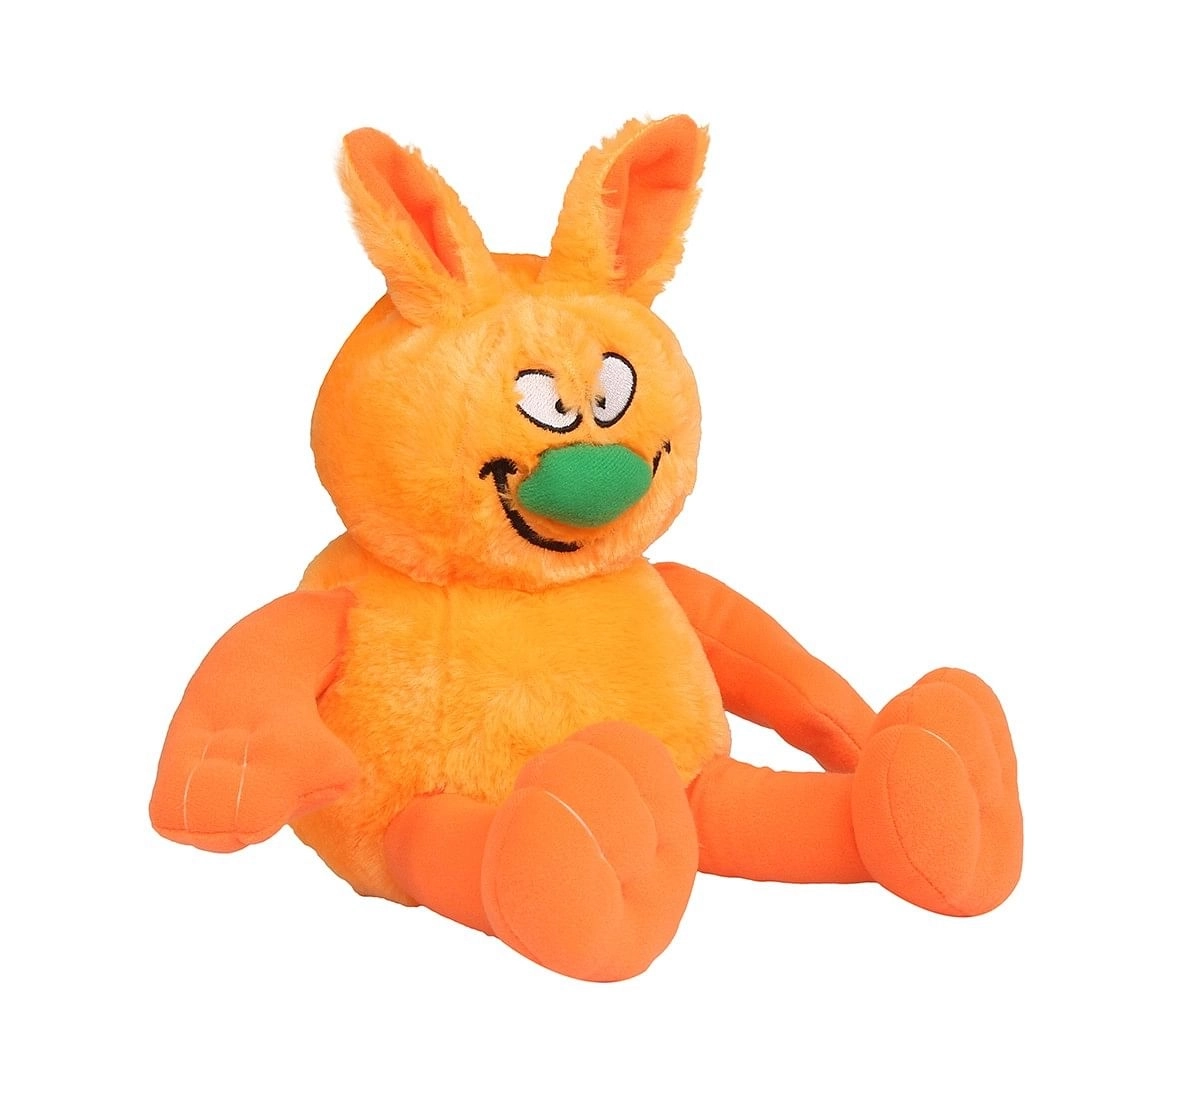 Hamleys Movers & Shakers- Ziggles Orange Interactive Soft Toys for Kids age 2Y+ - 13 Cm (Orange)